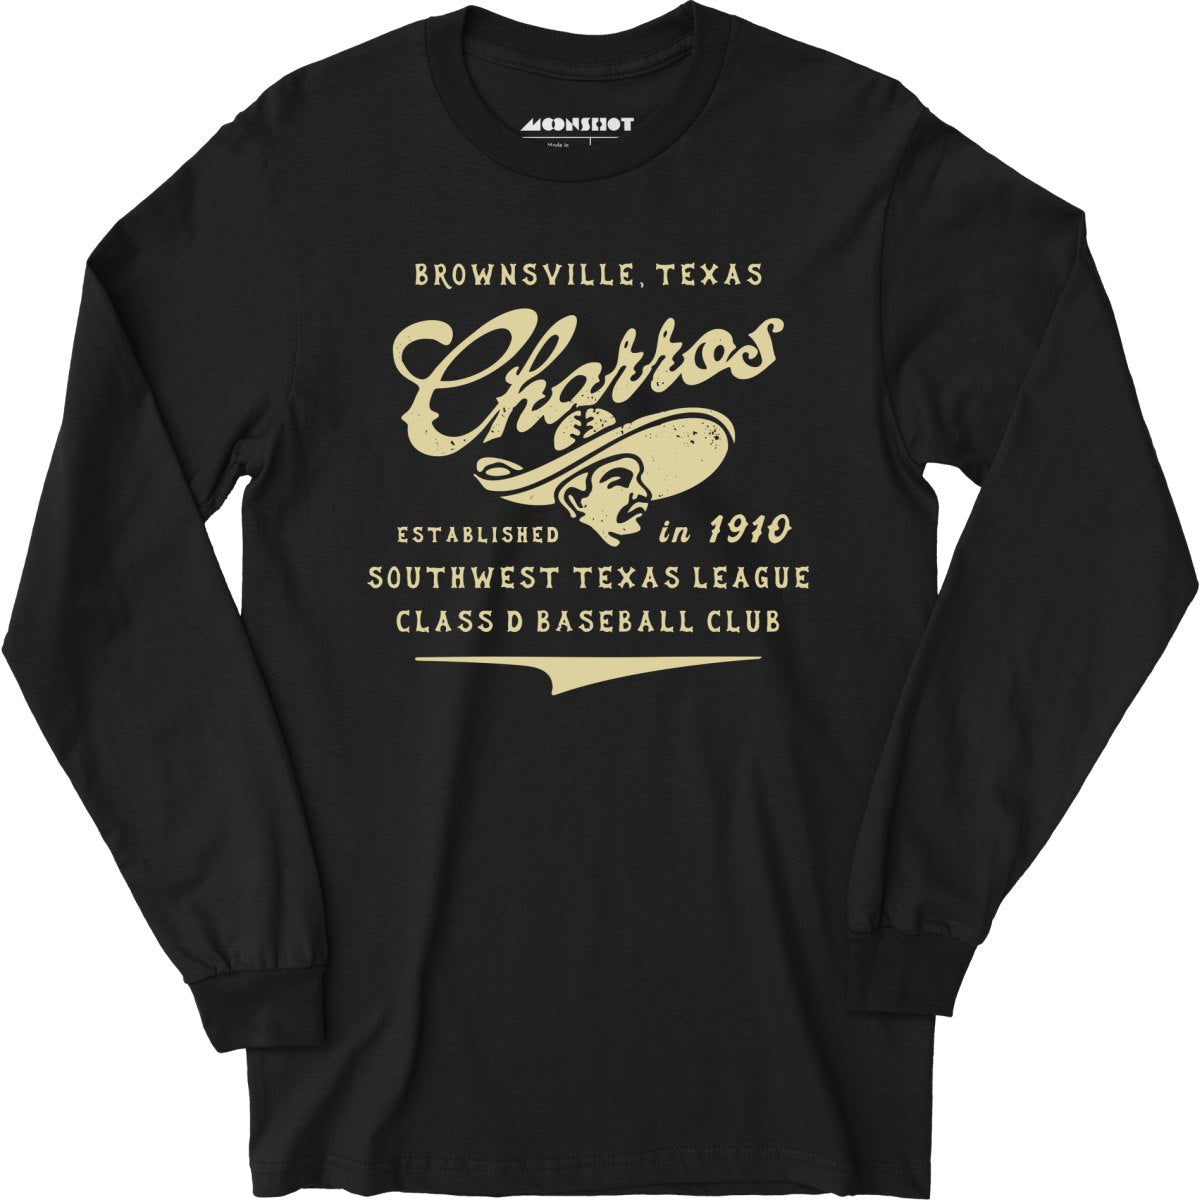 Brownsville Charros - Texas - Vintage Defunct Baseball Teams - Long Sleeve T-Shirt